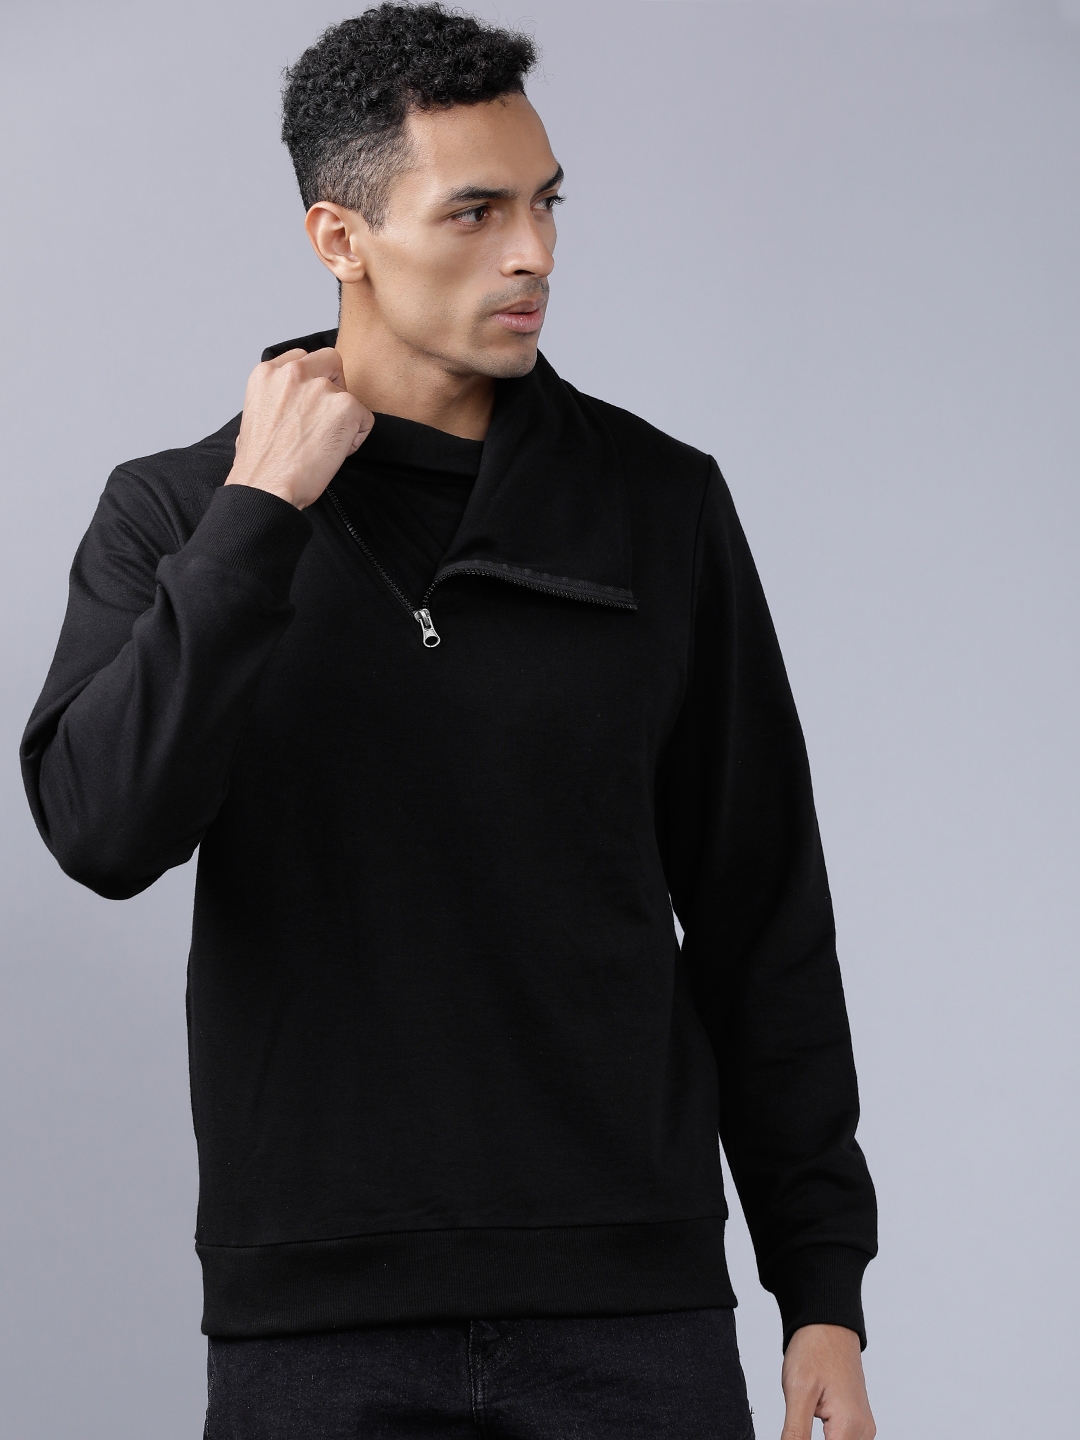 Buy HIGHLANDER Men Black Solid Sweatshirt - Sweatshirts for Men 7605354 ...